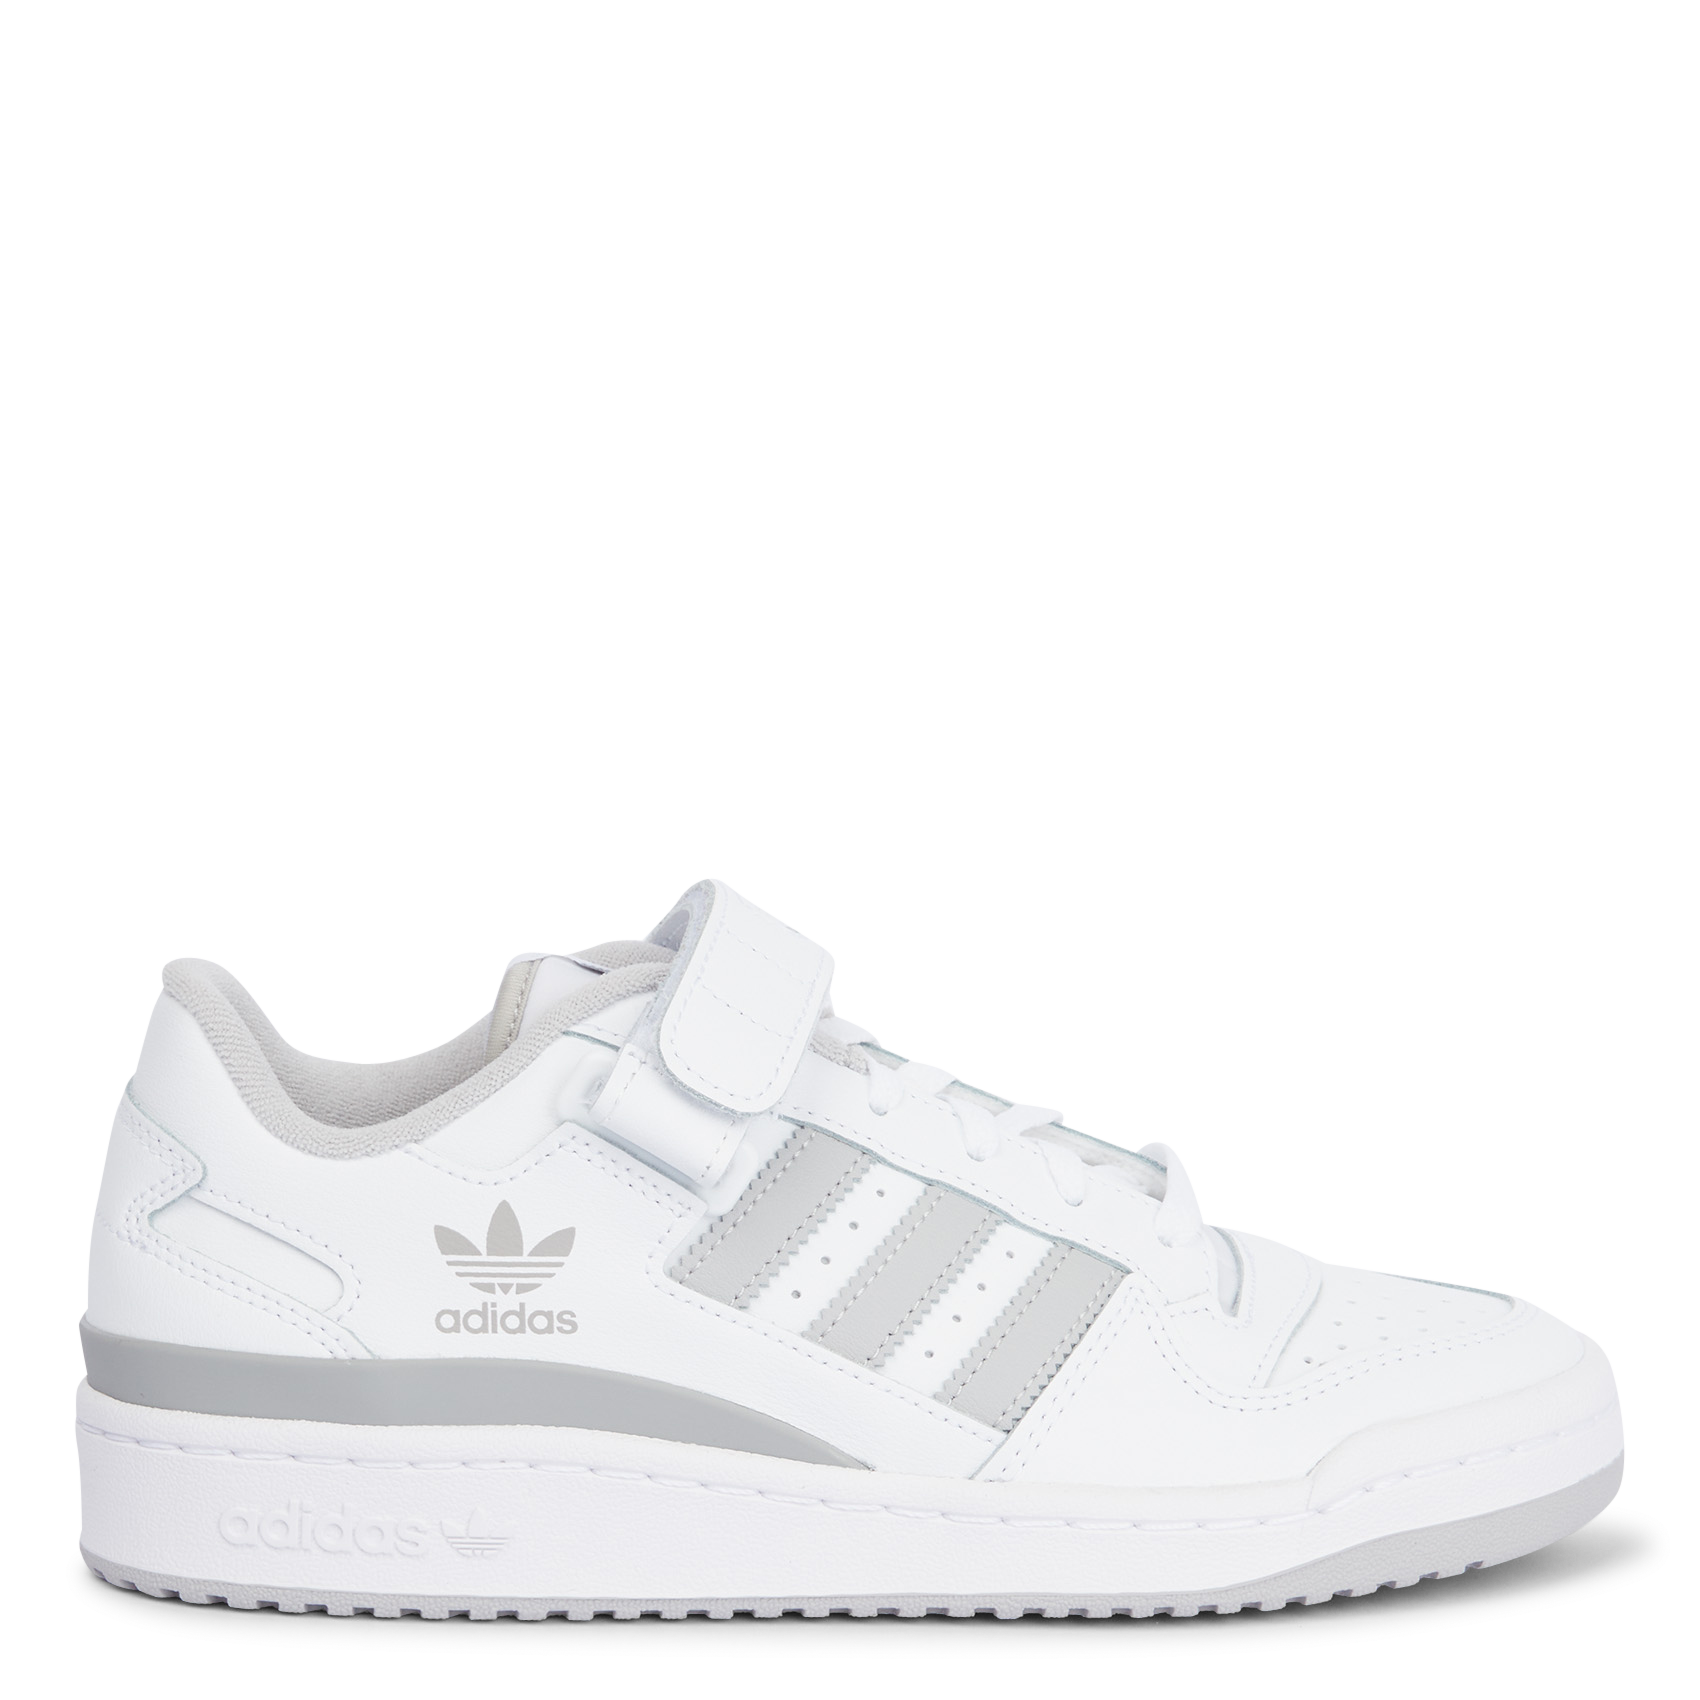 Buy Adidas ORIGINALS Unisex-Baby's White Sneaker -4 US at Amazon.in